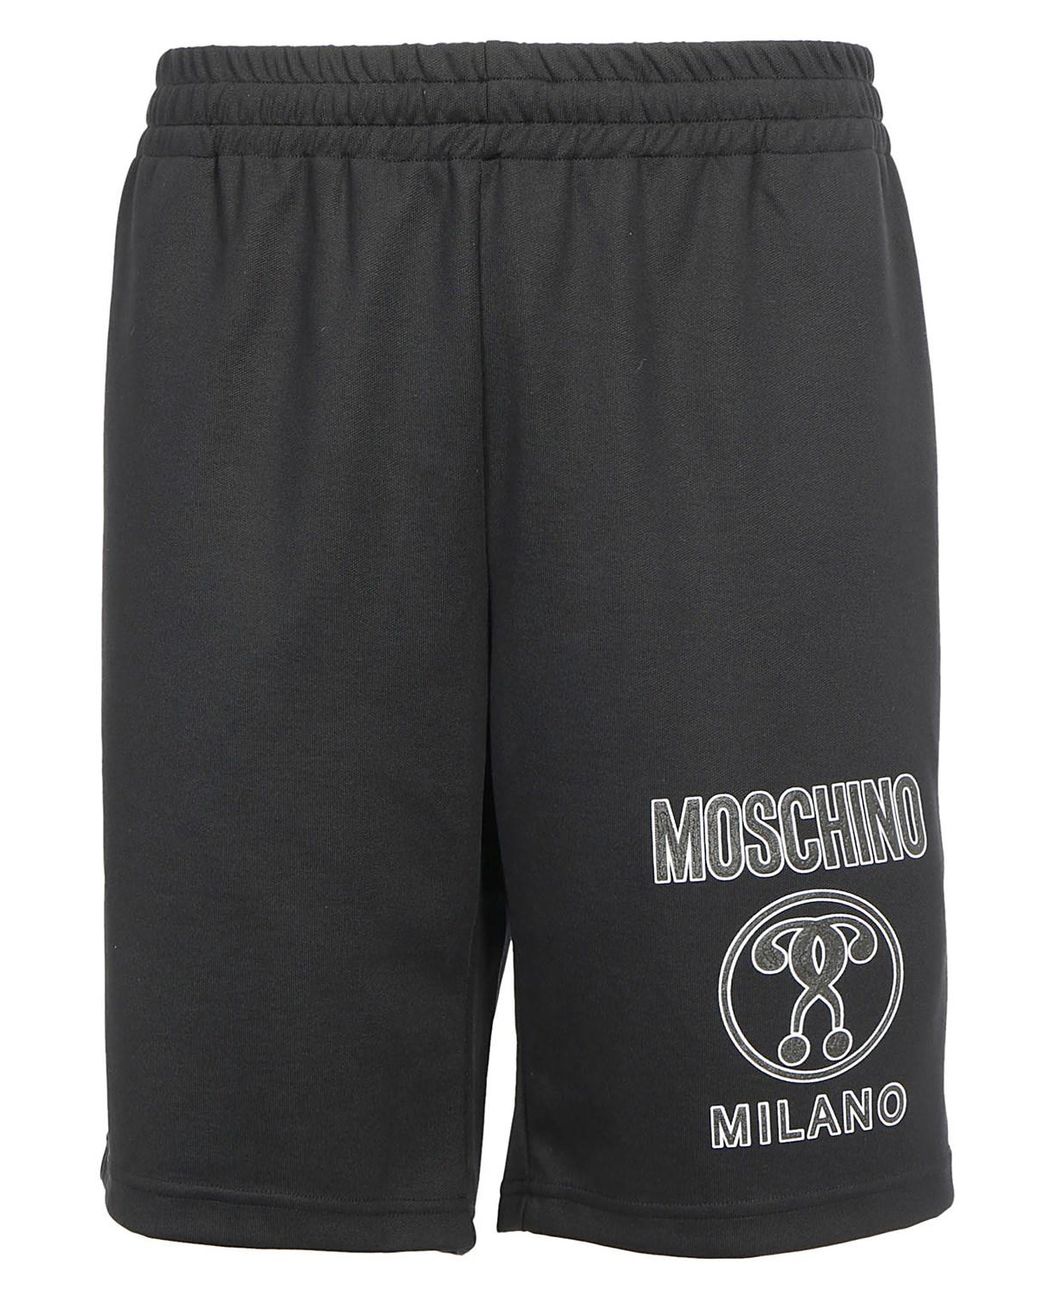 Moschino Bermuda Shorts in Black for Men - Lyst